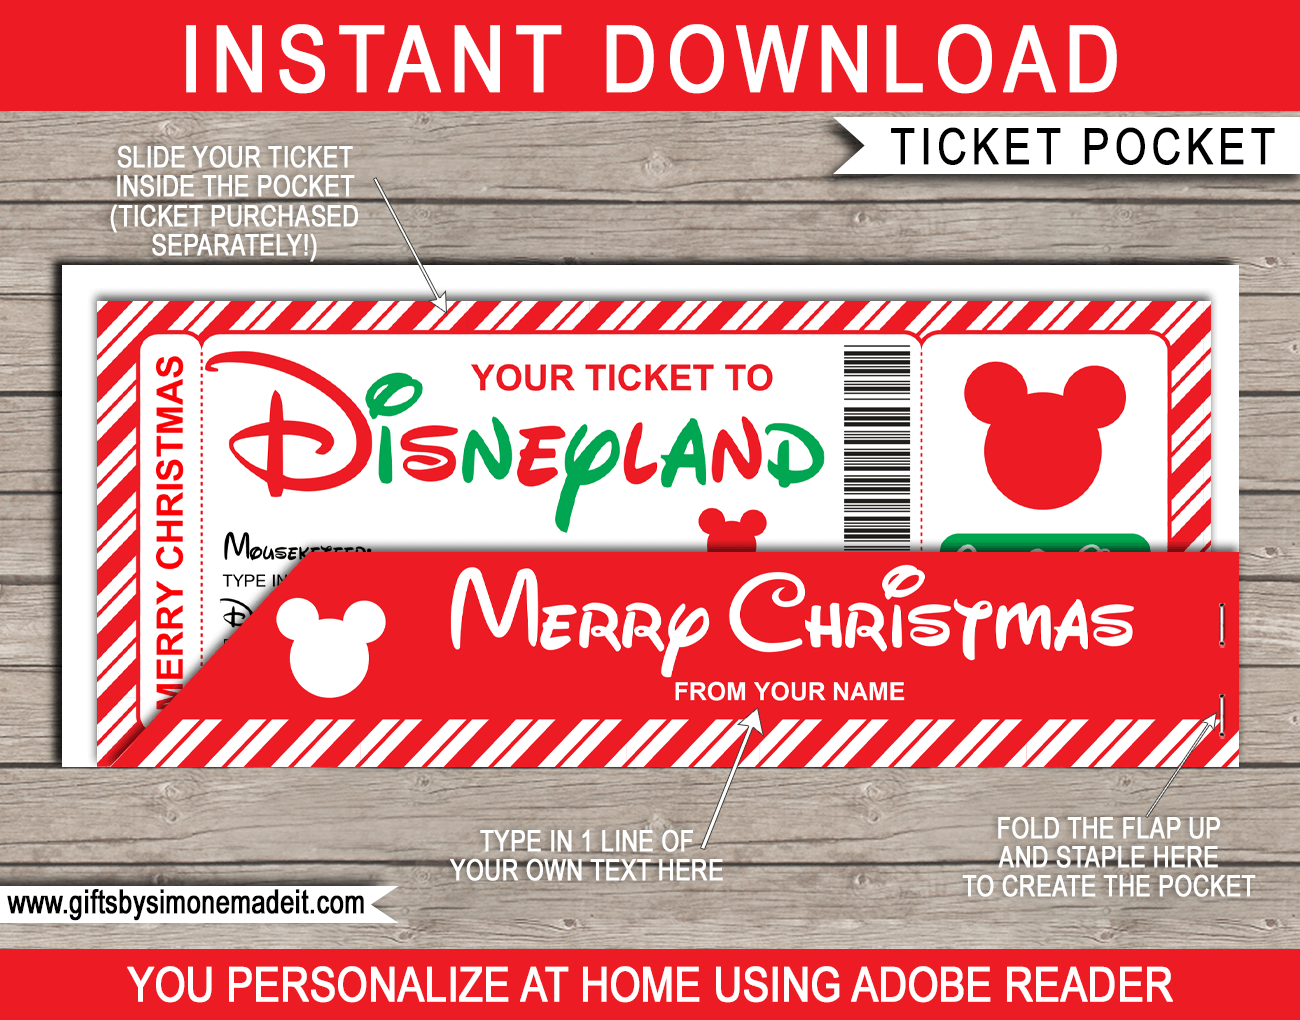 Christmas Disney Ticket Sleeve Template | Printable Gift Voucher Holder